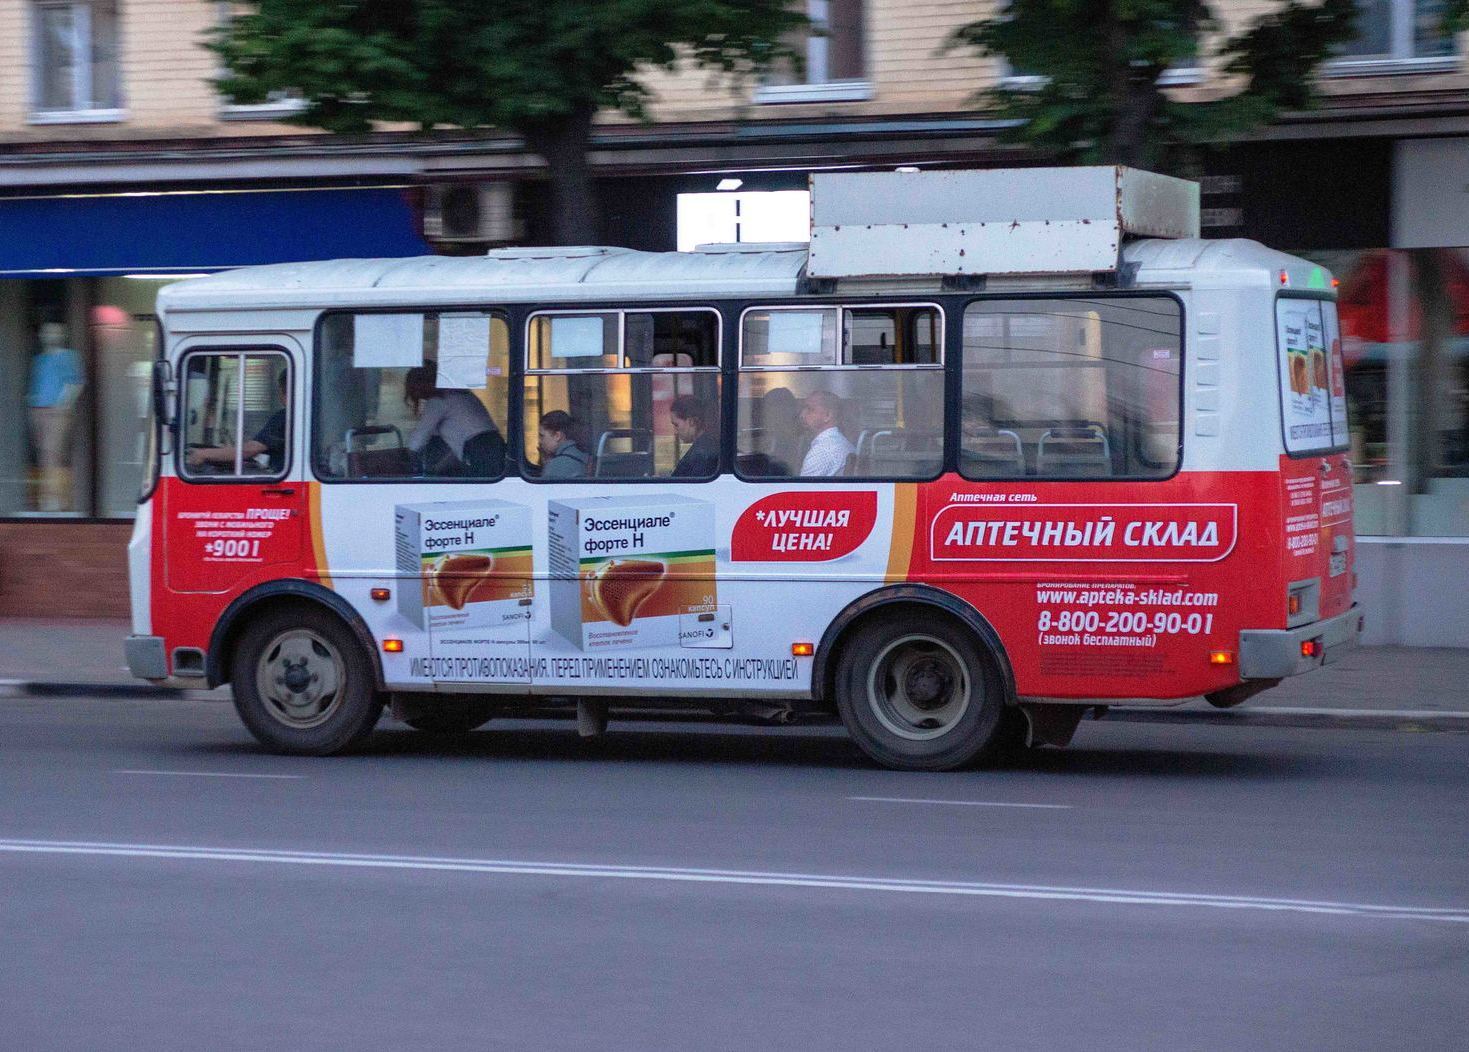 Автобусы ру орел. Реклама на транспорте. Реклама на автобусах. Транзитная реклама на транспорте. Наружная реклама на автобусах.